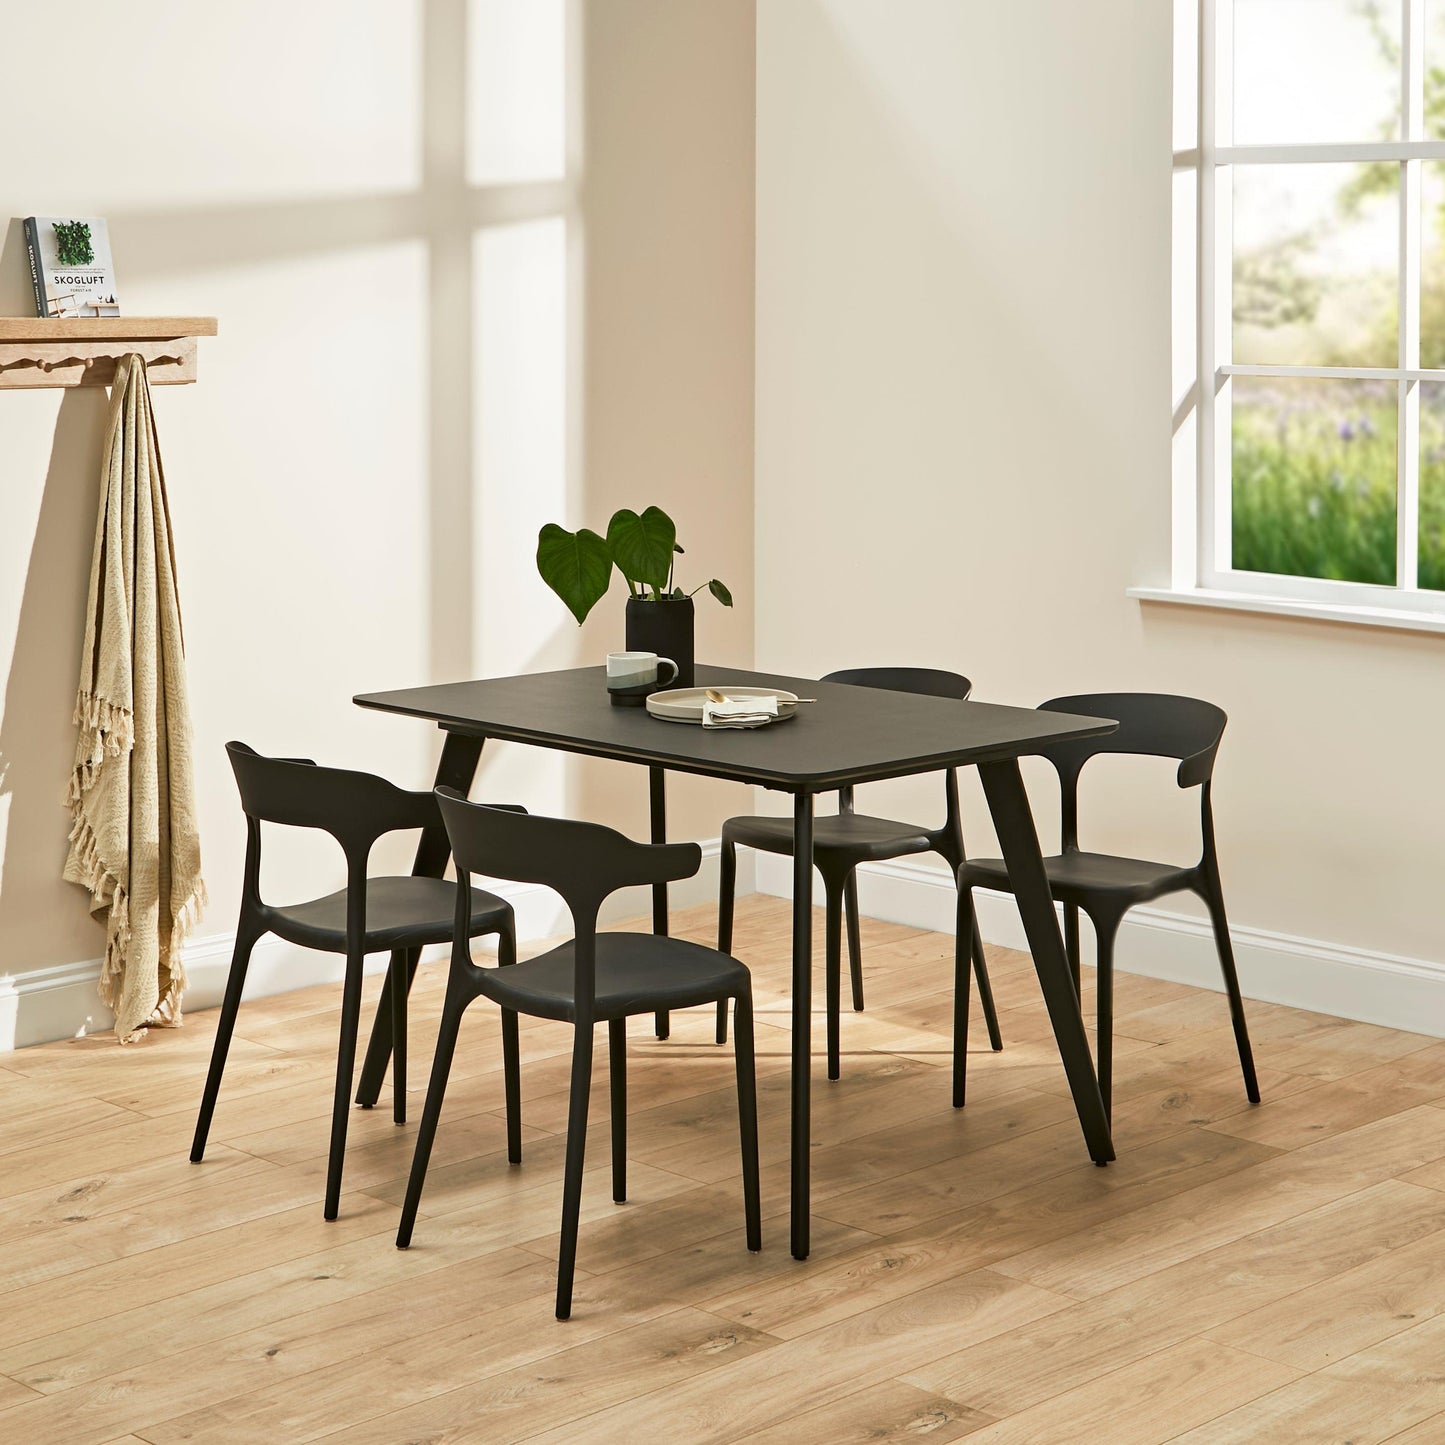 Finn dining chairs - set of 4 - black